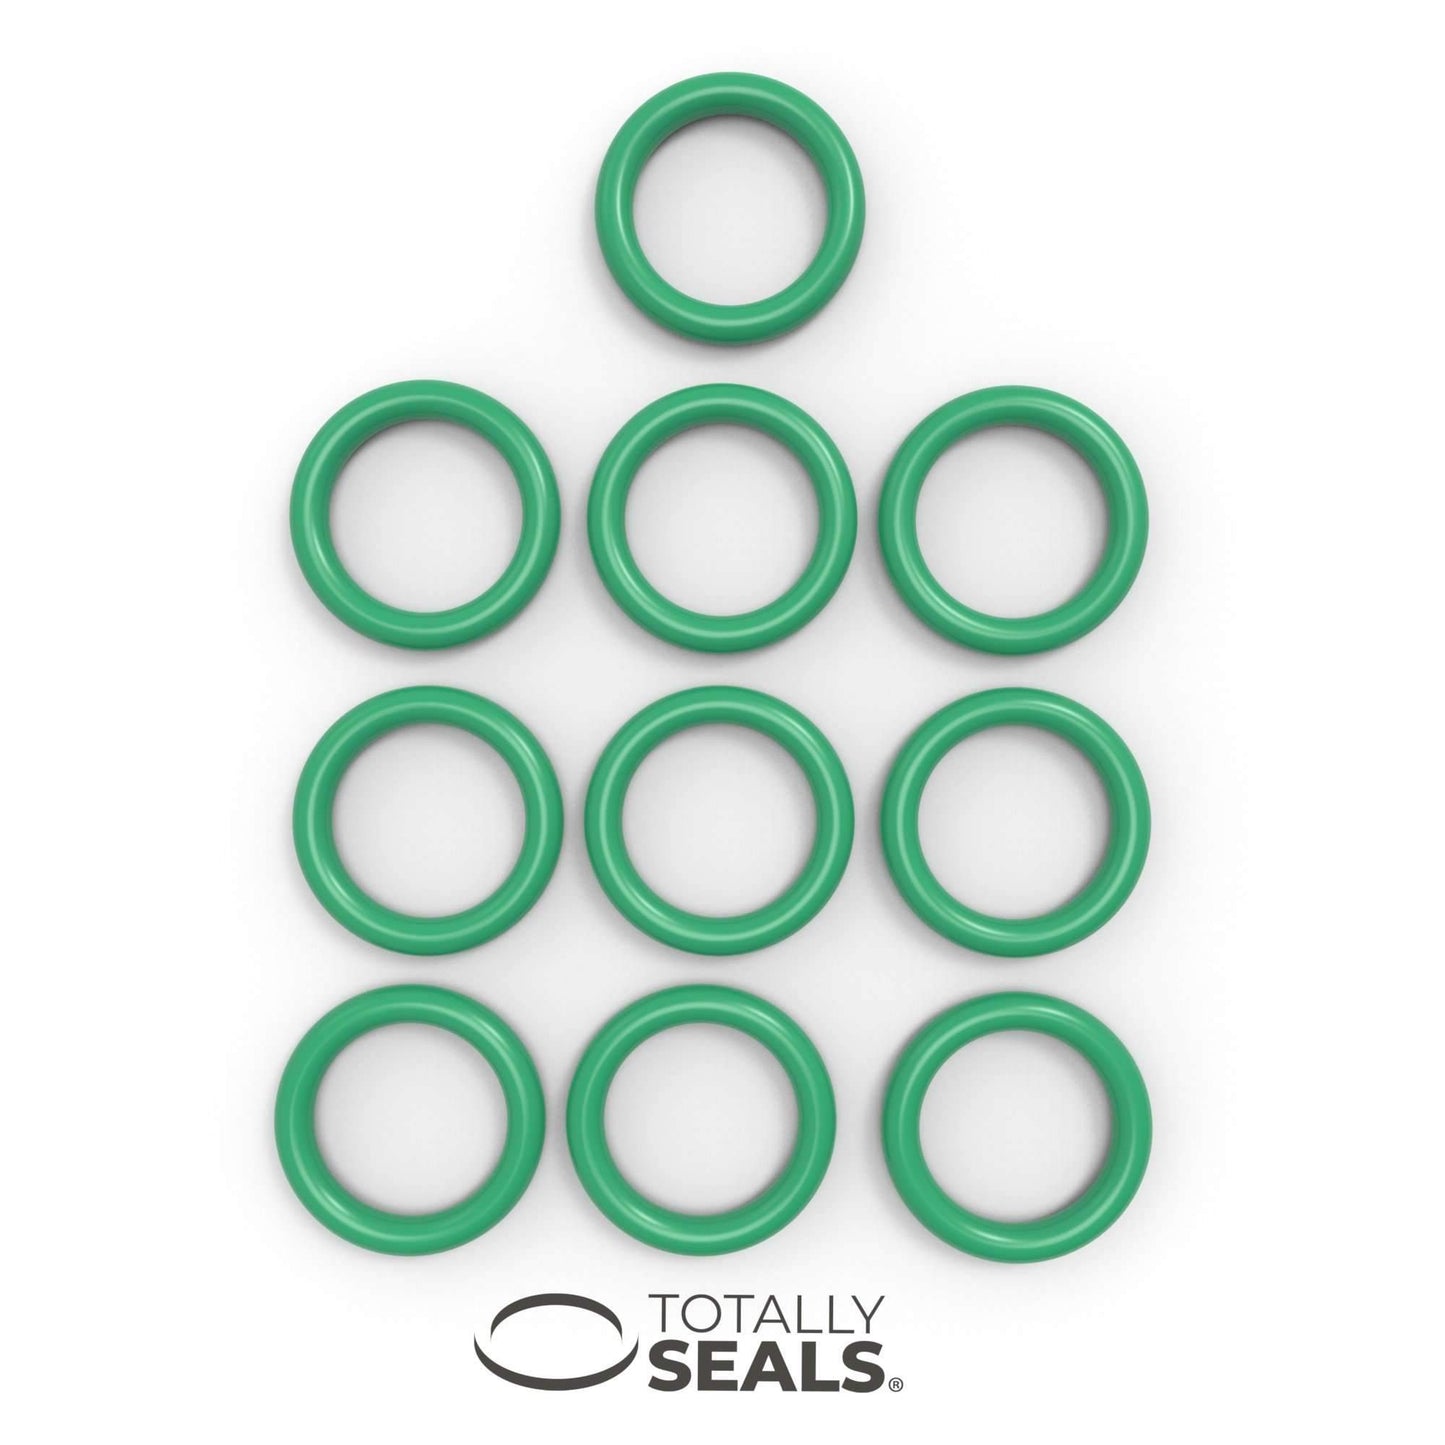 19mm x 2mm (23mm OD) FKM (Viton™) O-Rings - Totally Seals®